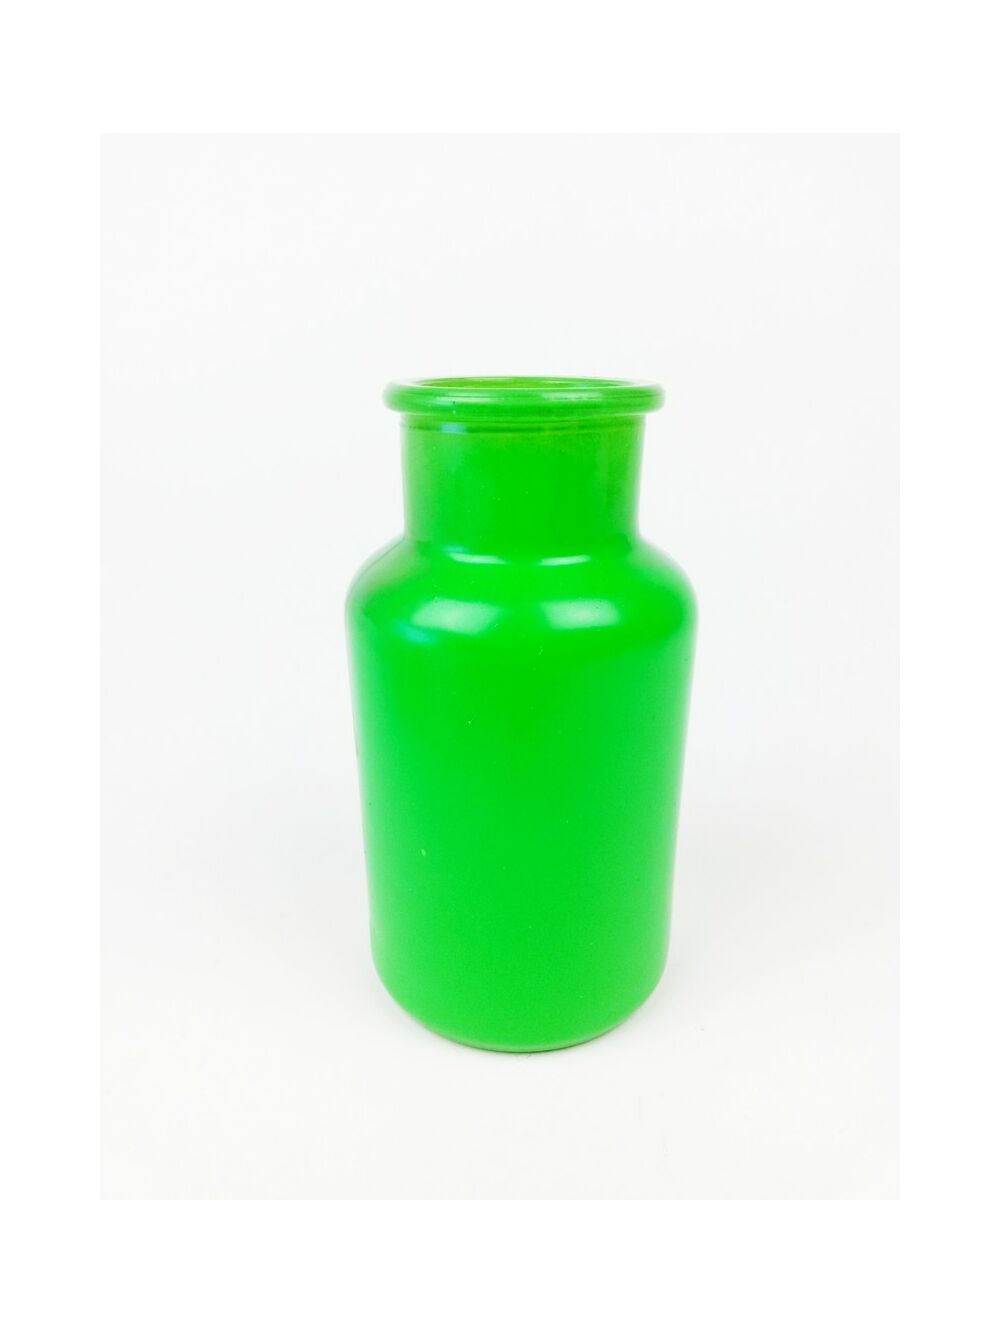 Üveg palack nyakas - Zöld